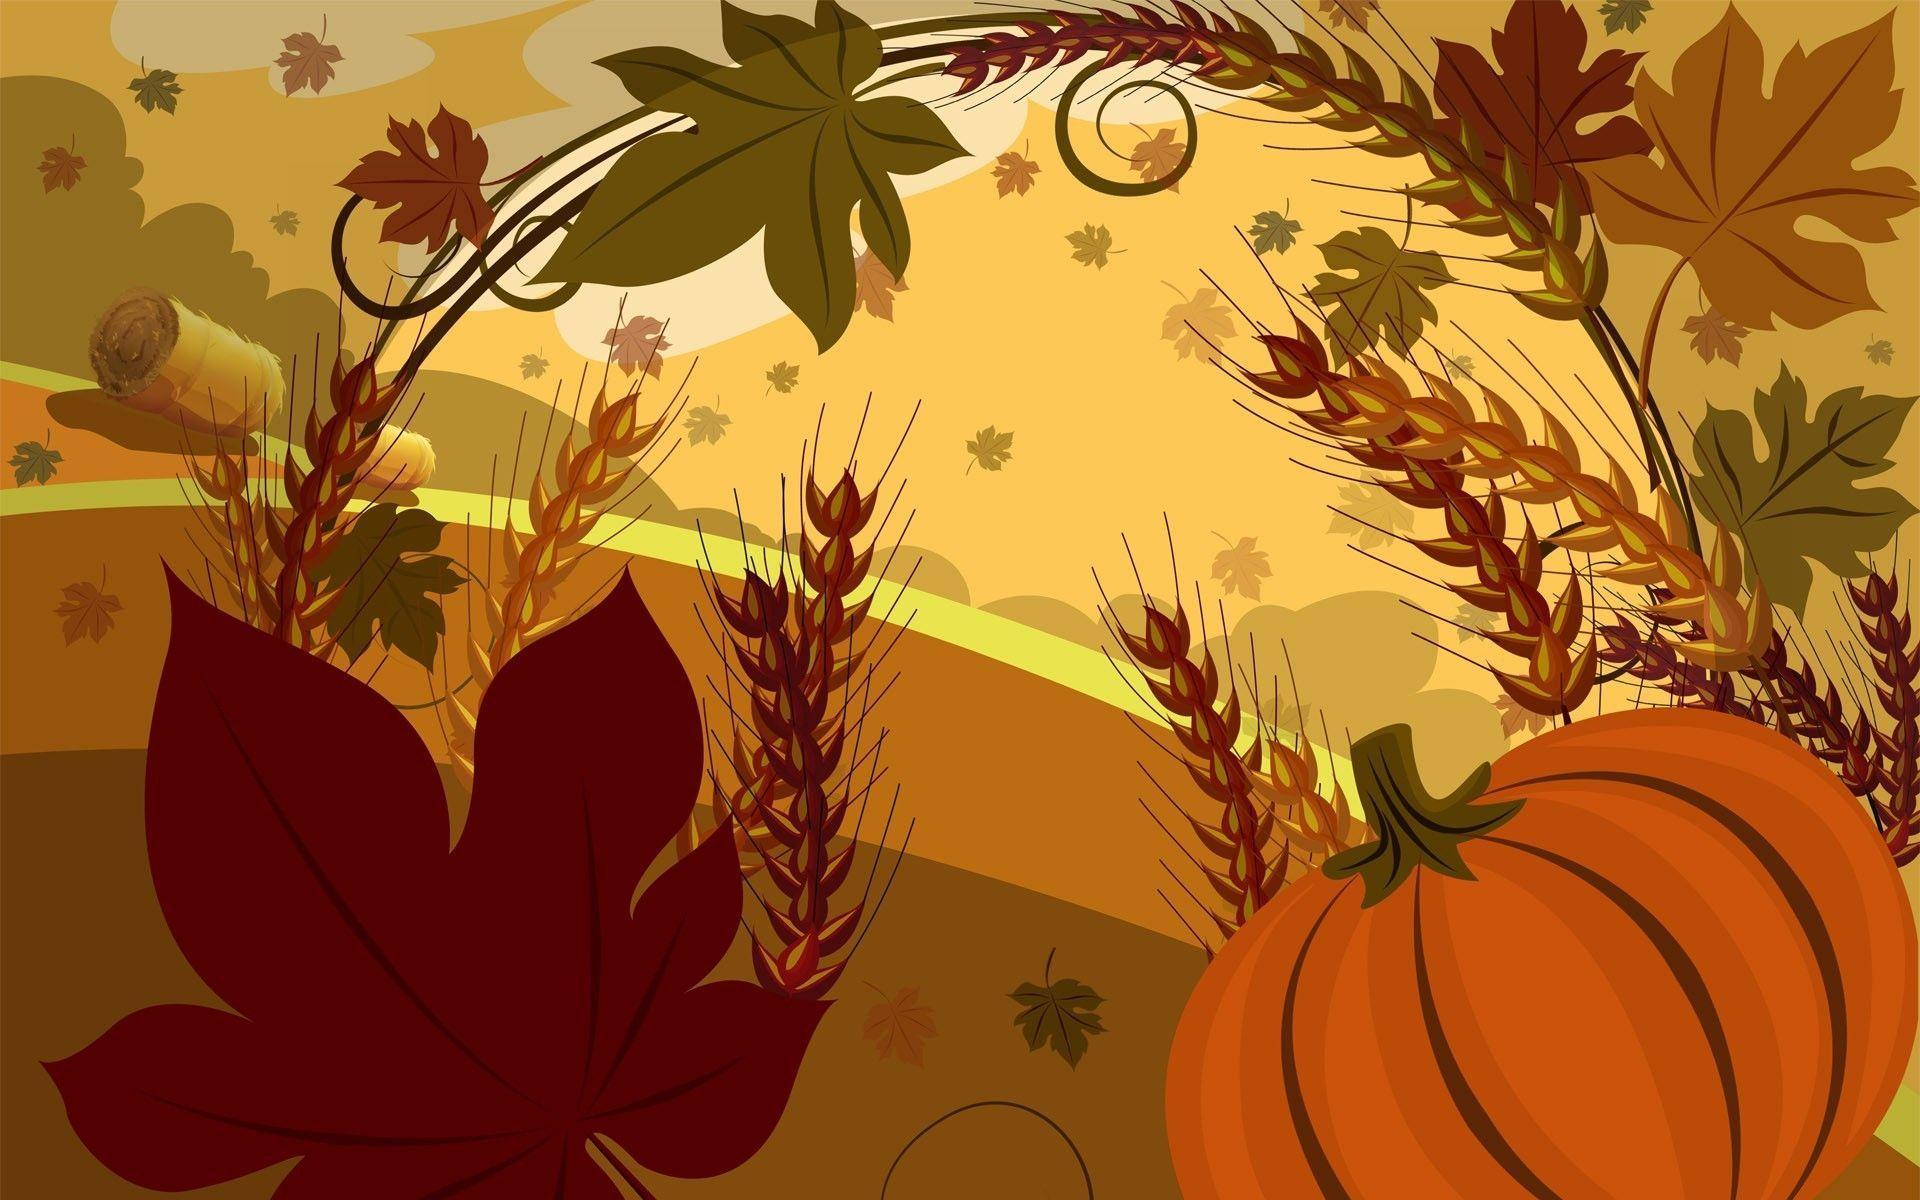 Happy Thanksgiving Wallpaper Background HD Background taken